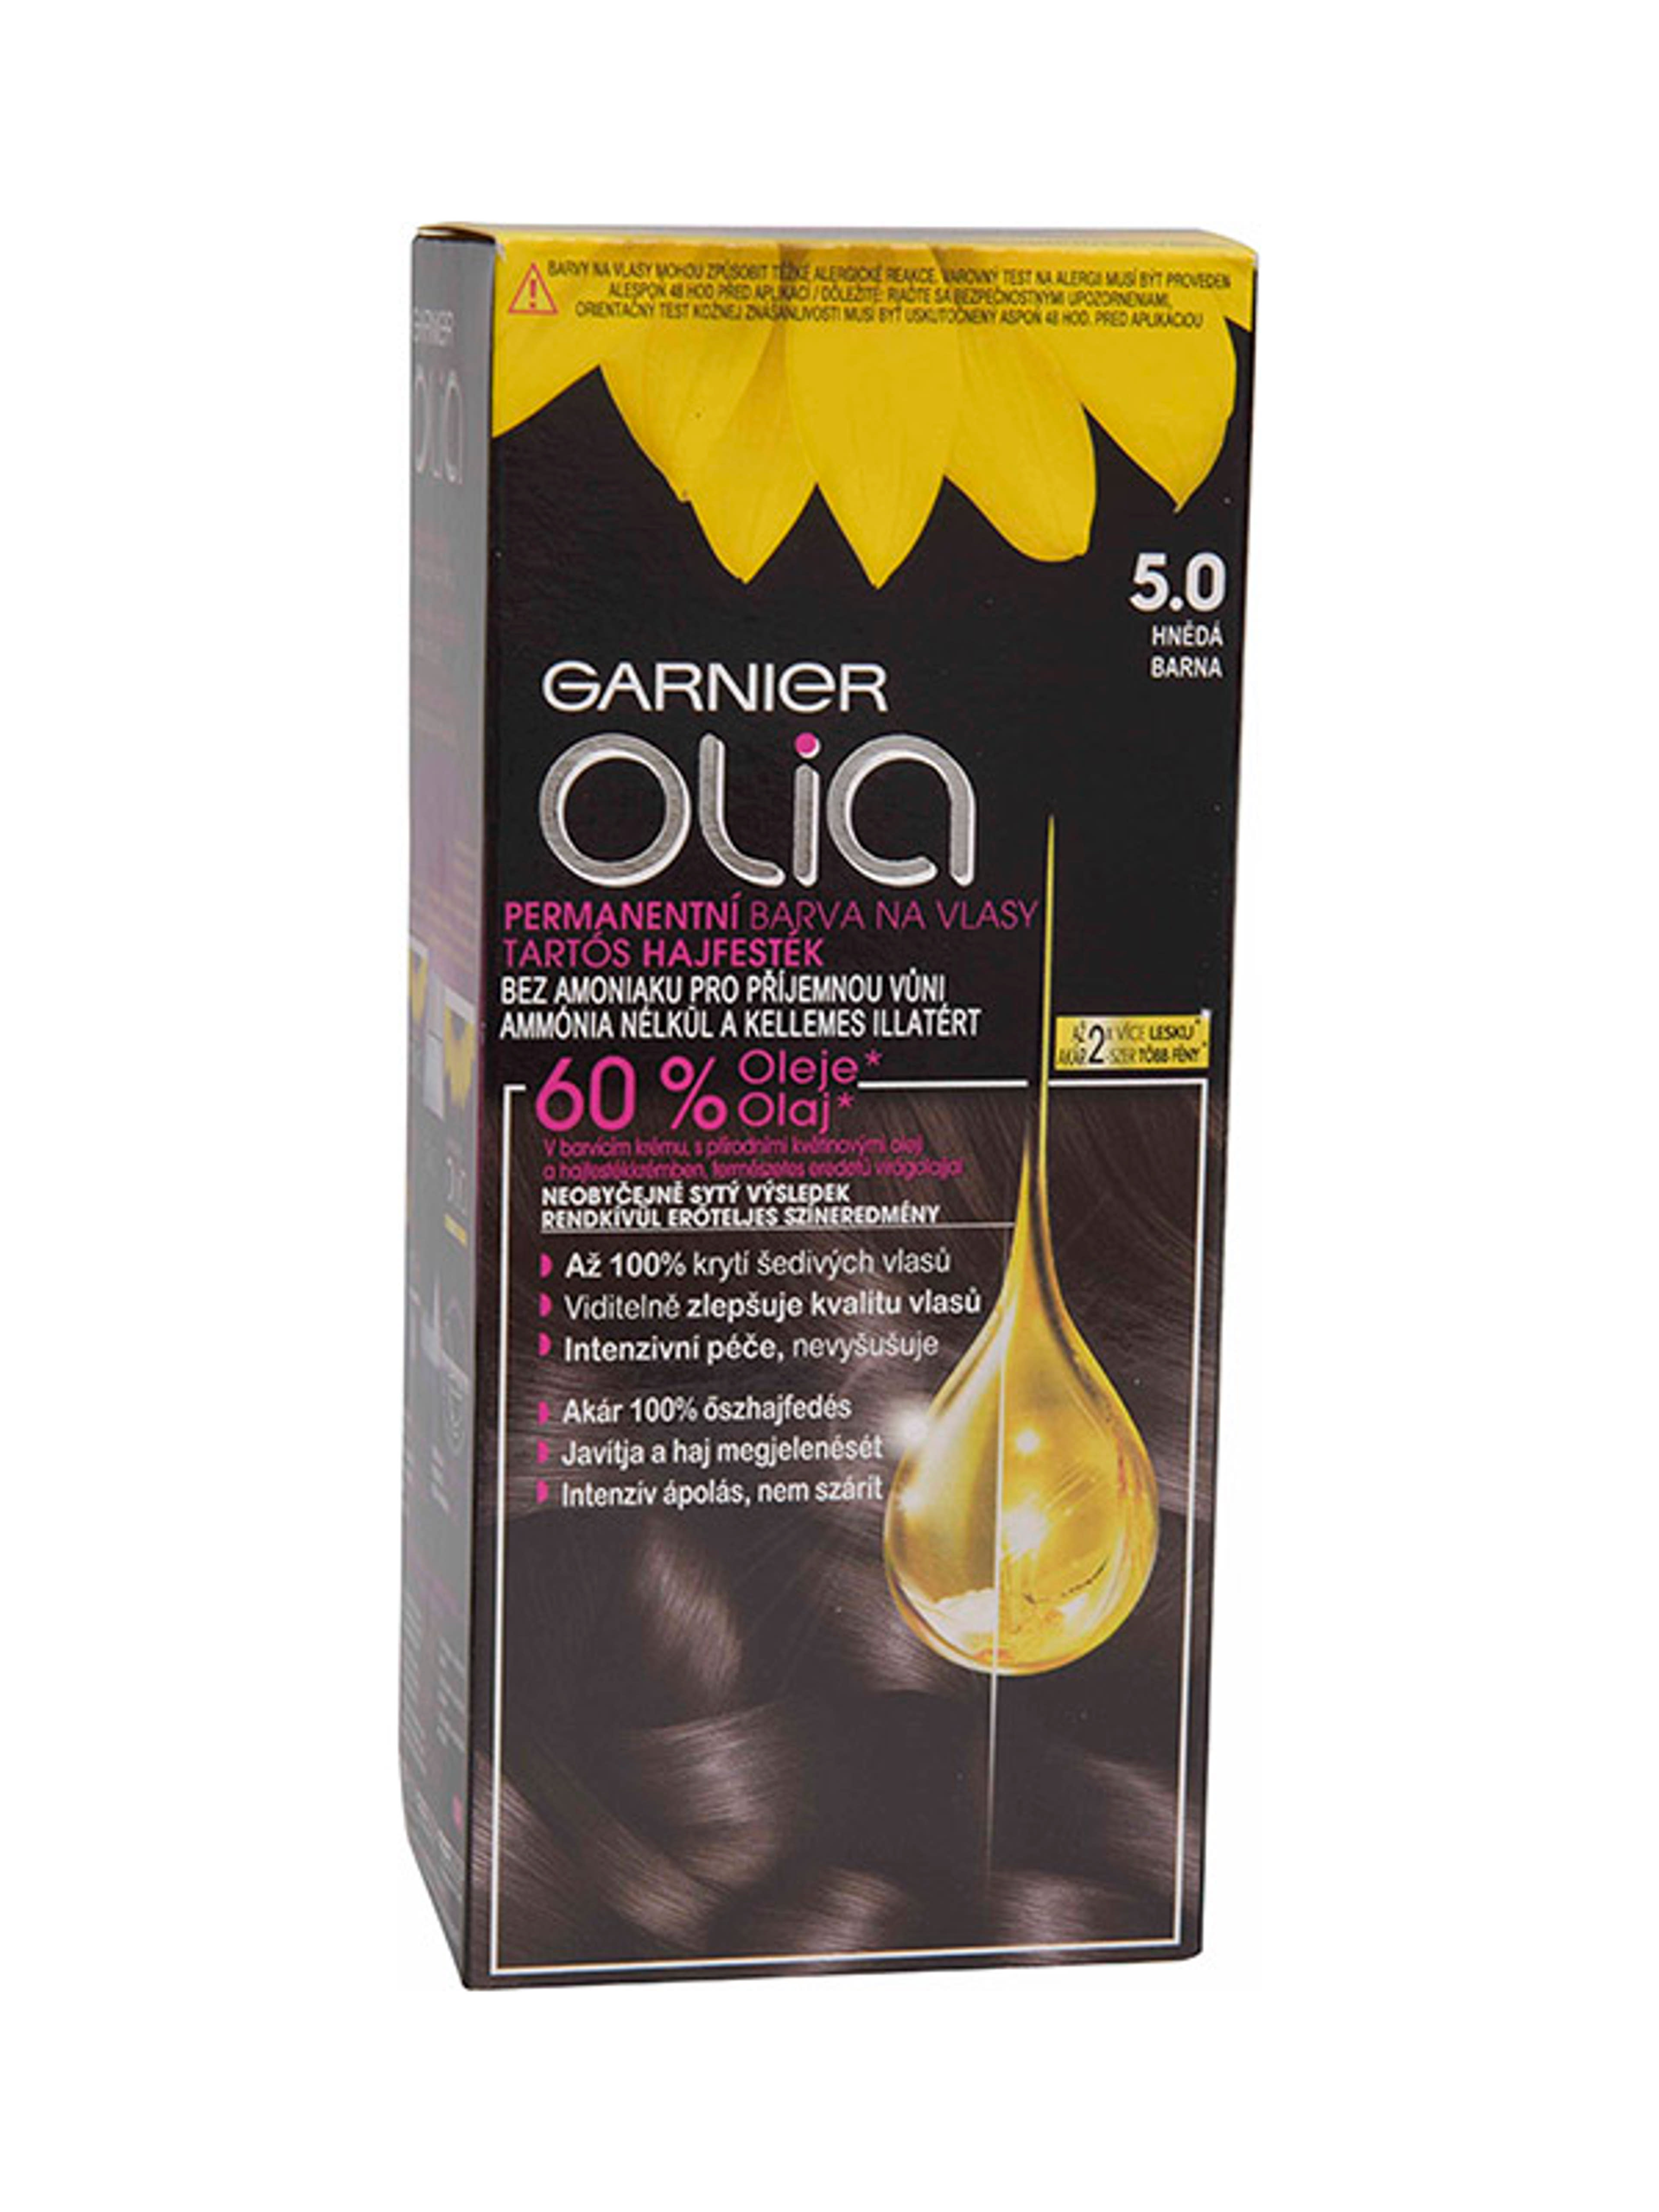 Garnier Olia tartós hajfesték 5.0 Barna - 1 db-1